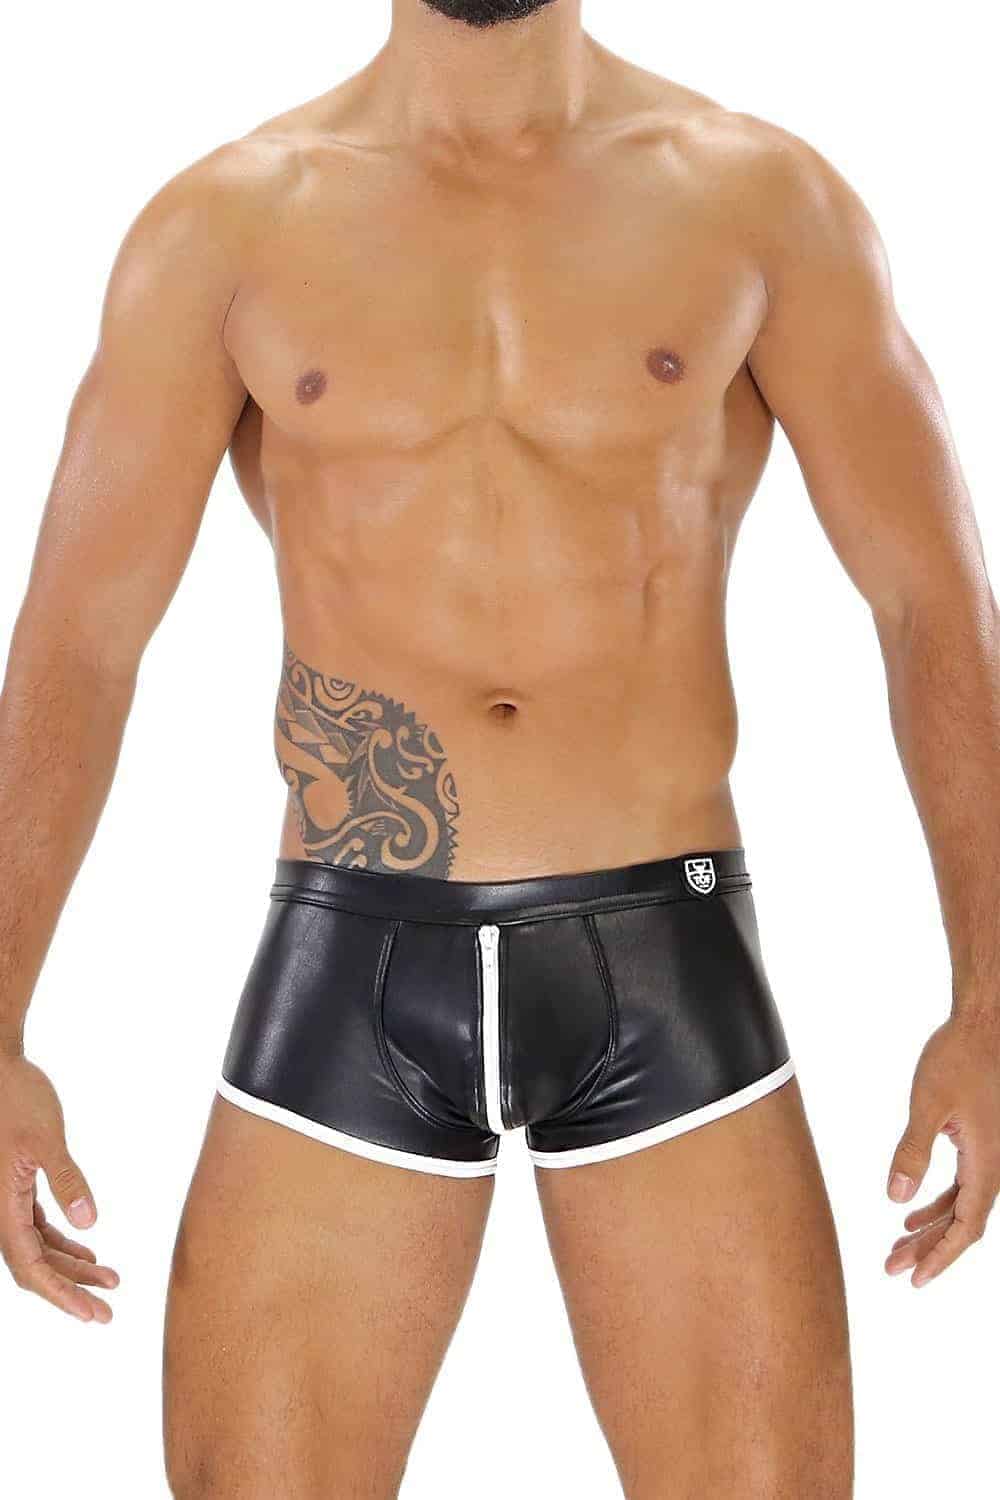 TOF Paris Fetish Boxer Underwear - Leatherette + Full Front to